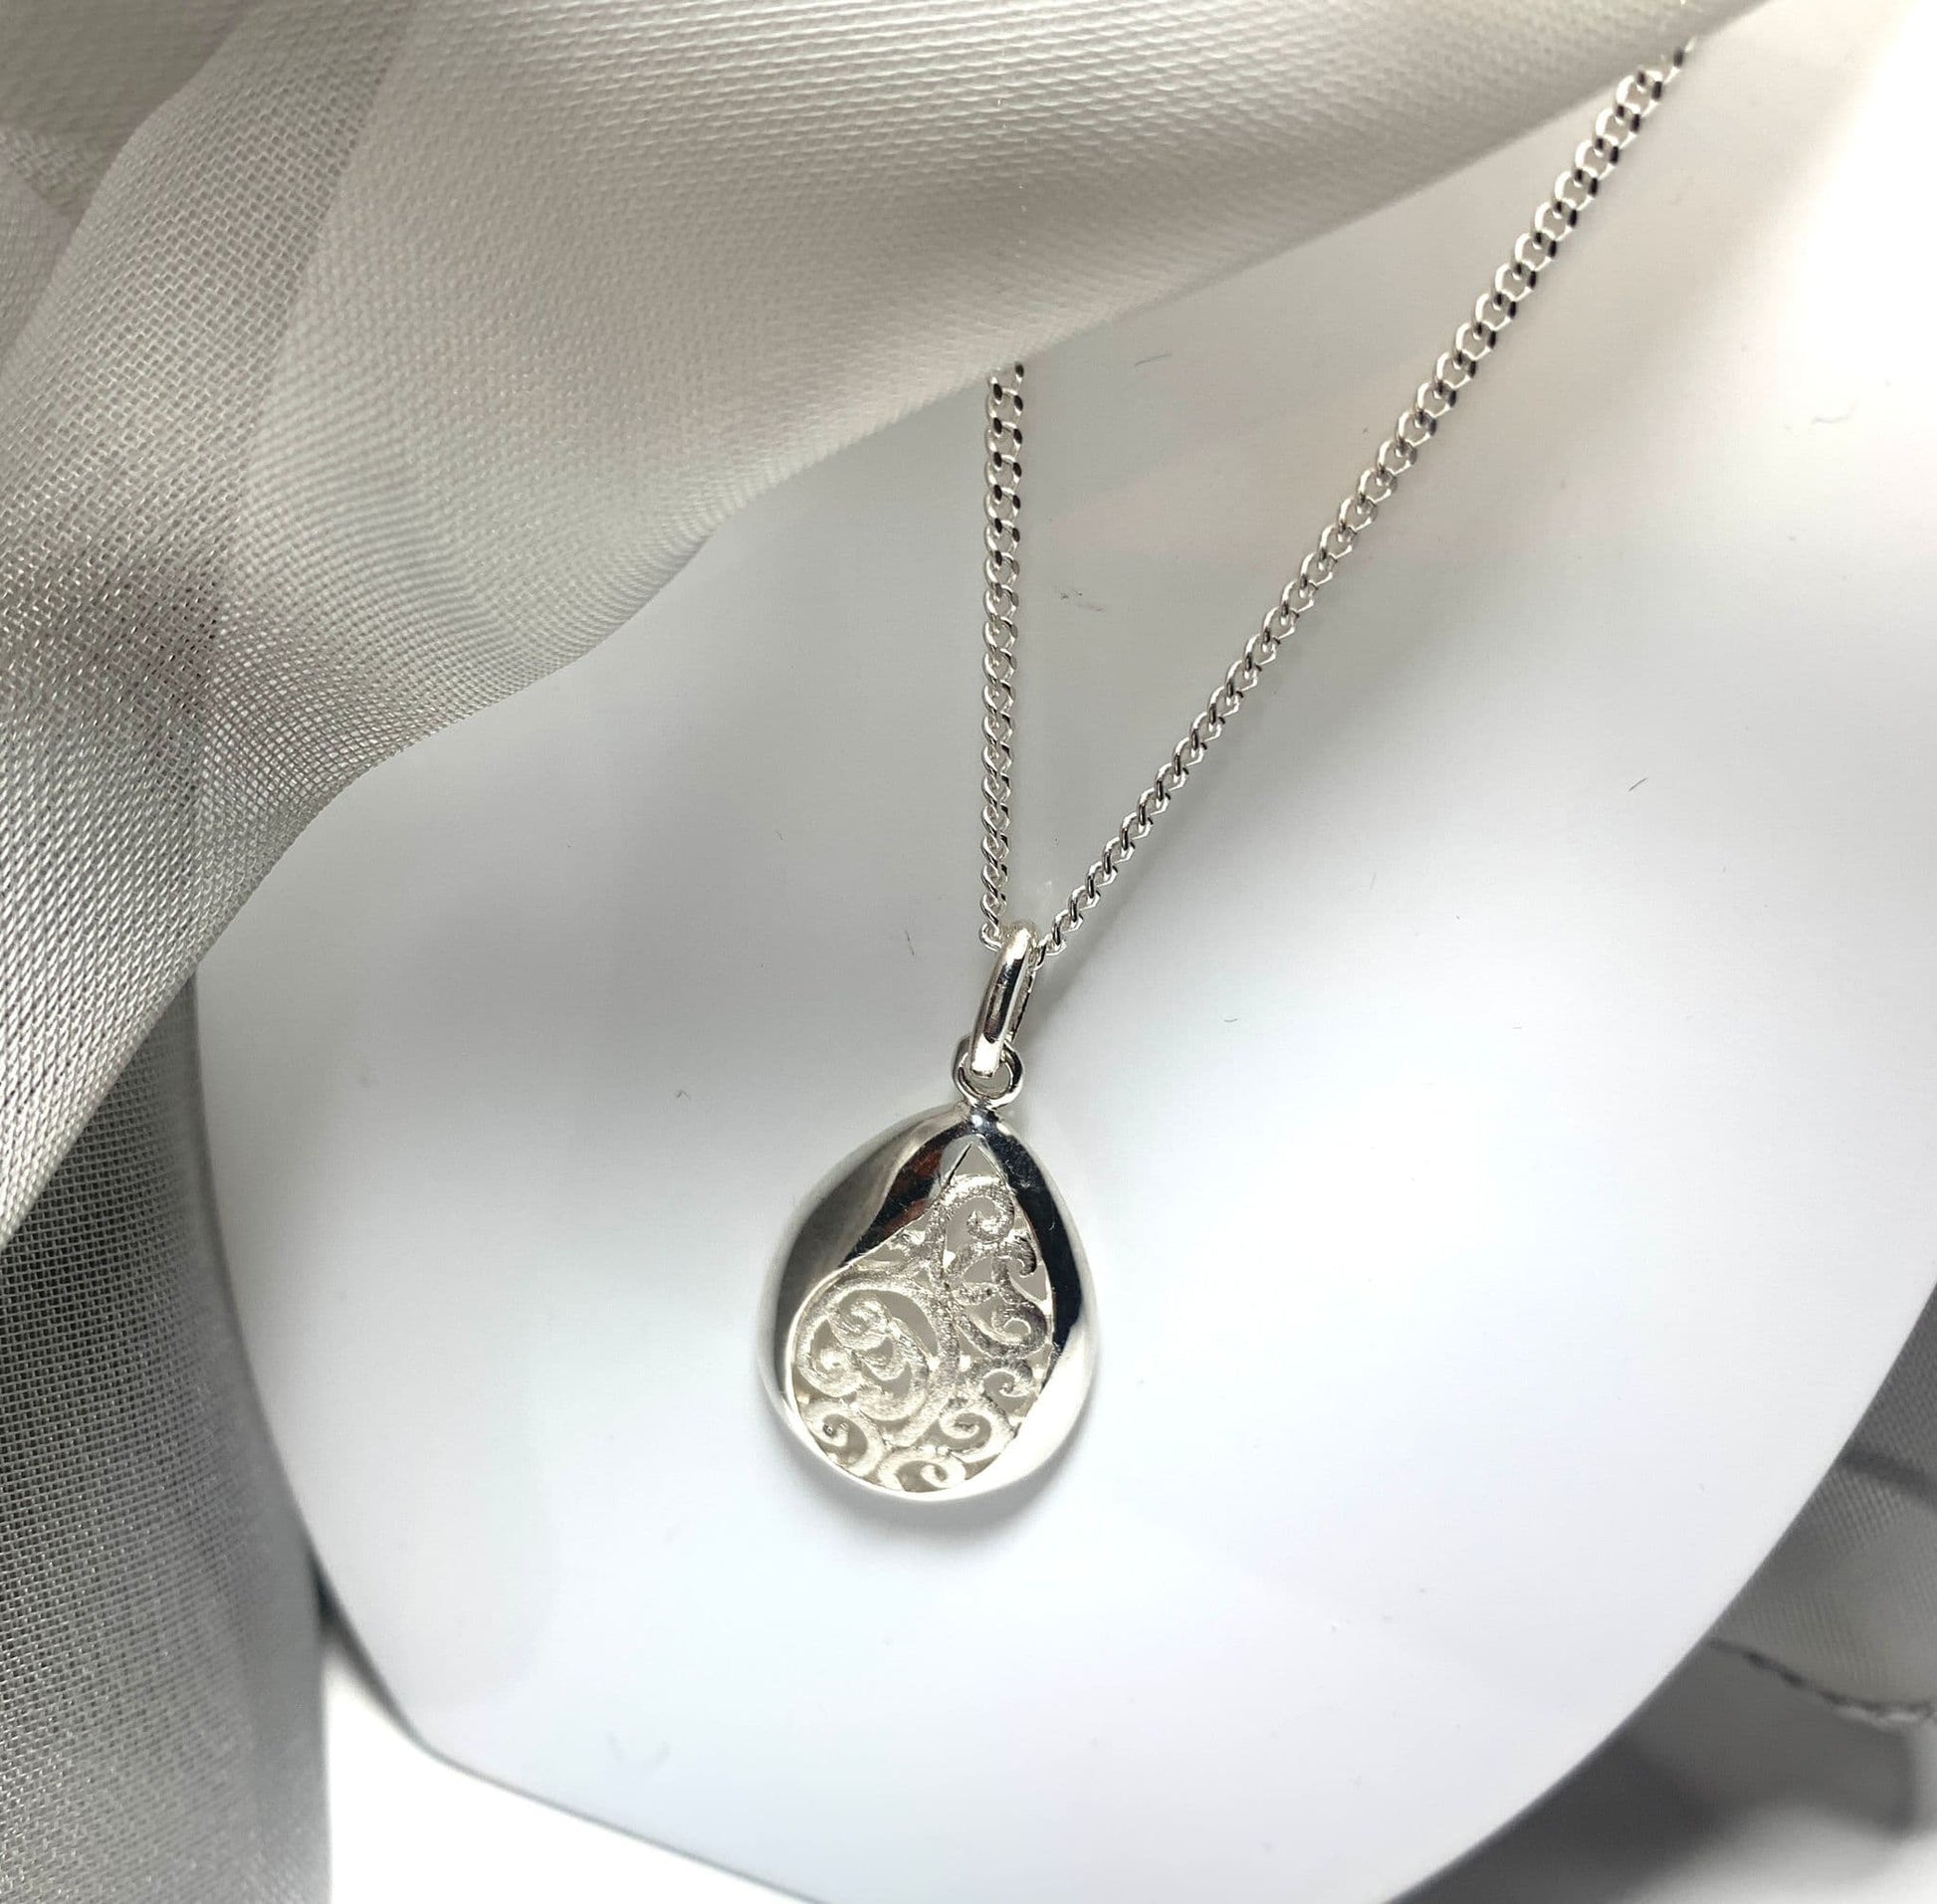 Pear shaped filigree teardrop sterling silver necklace pendant